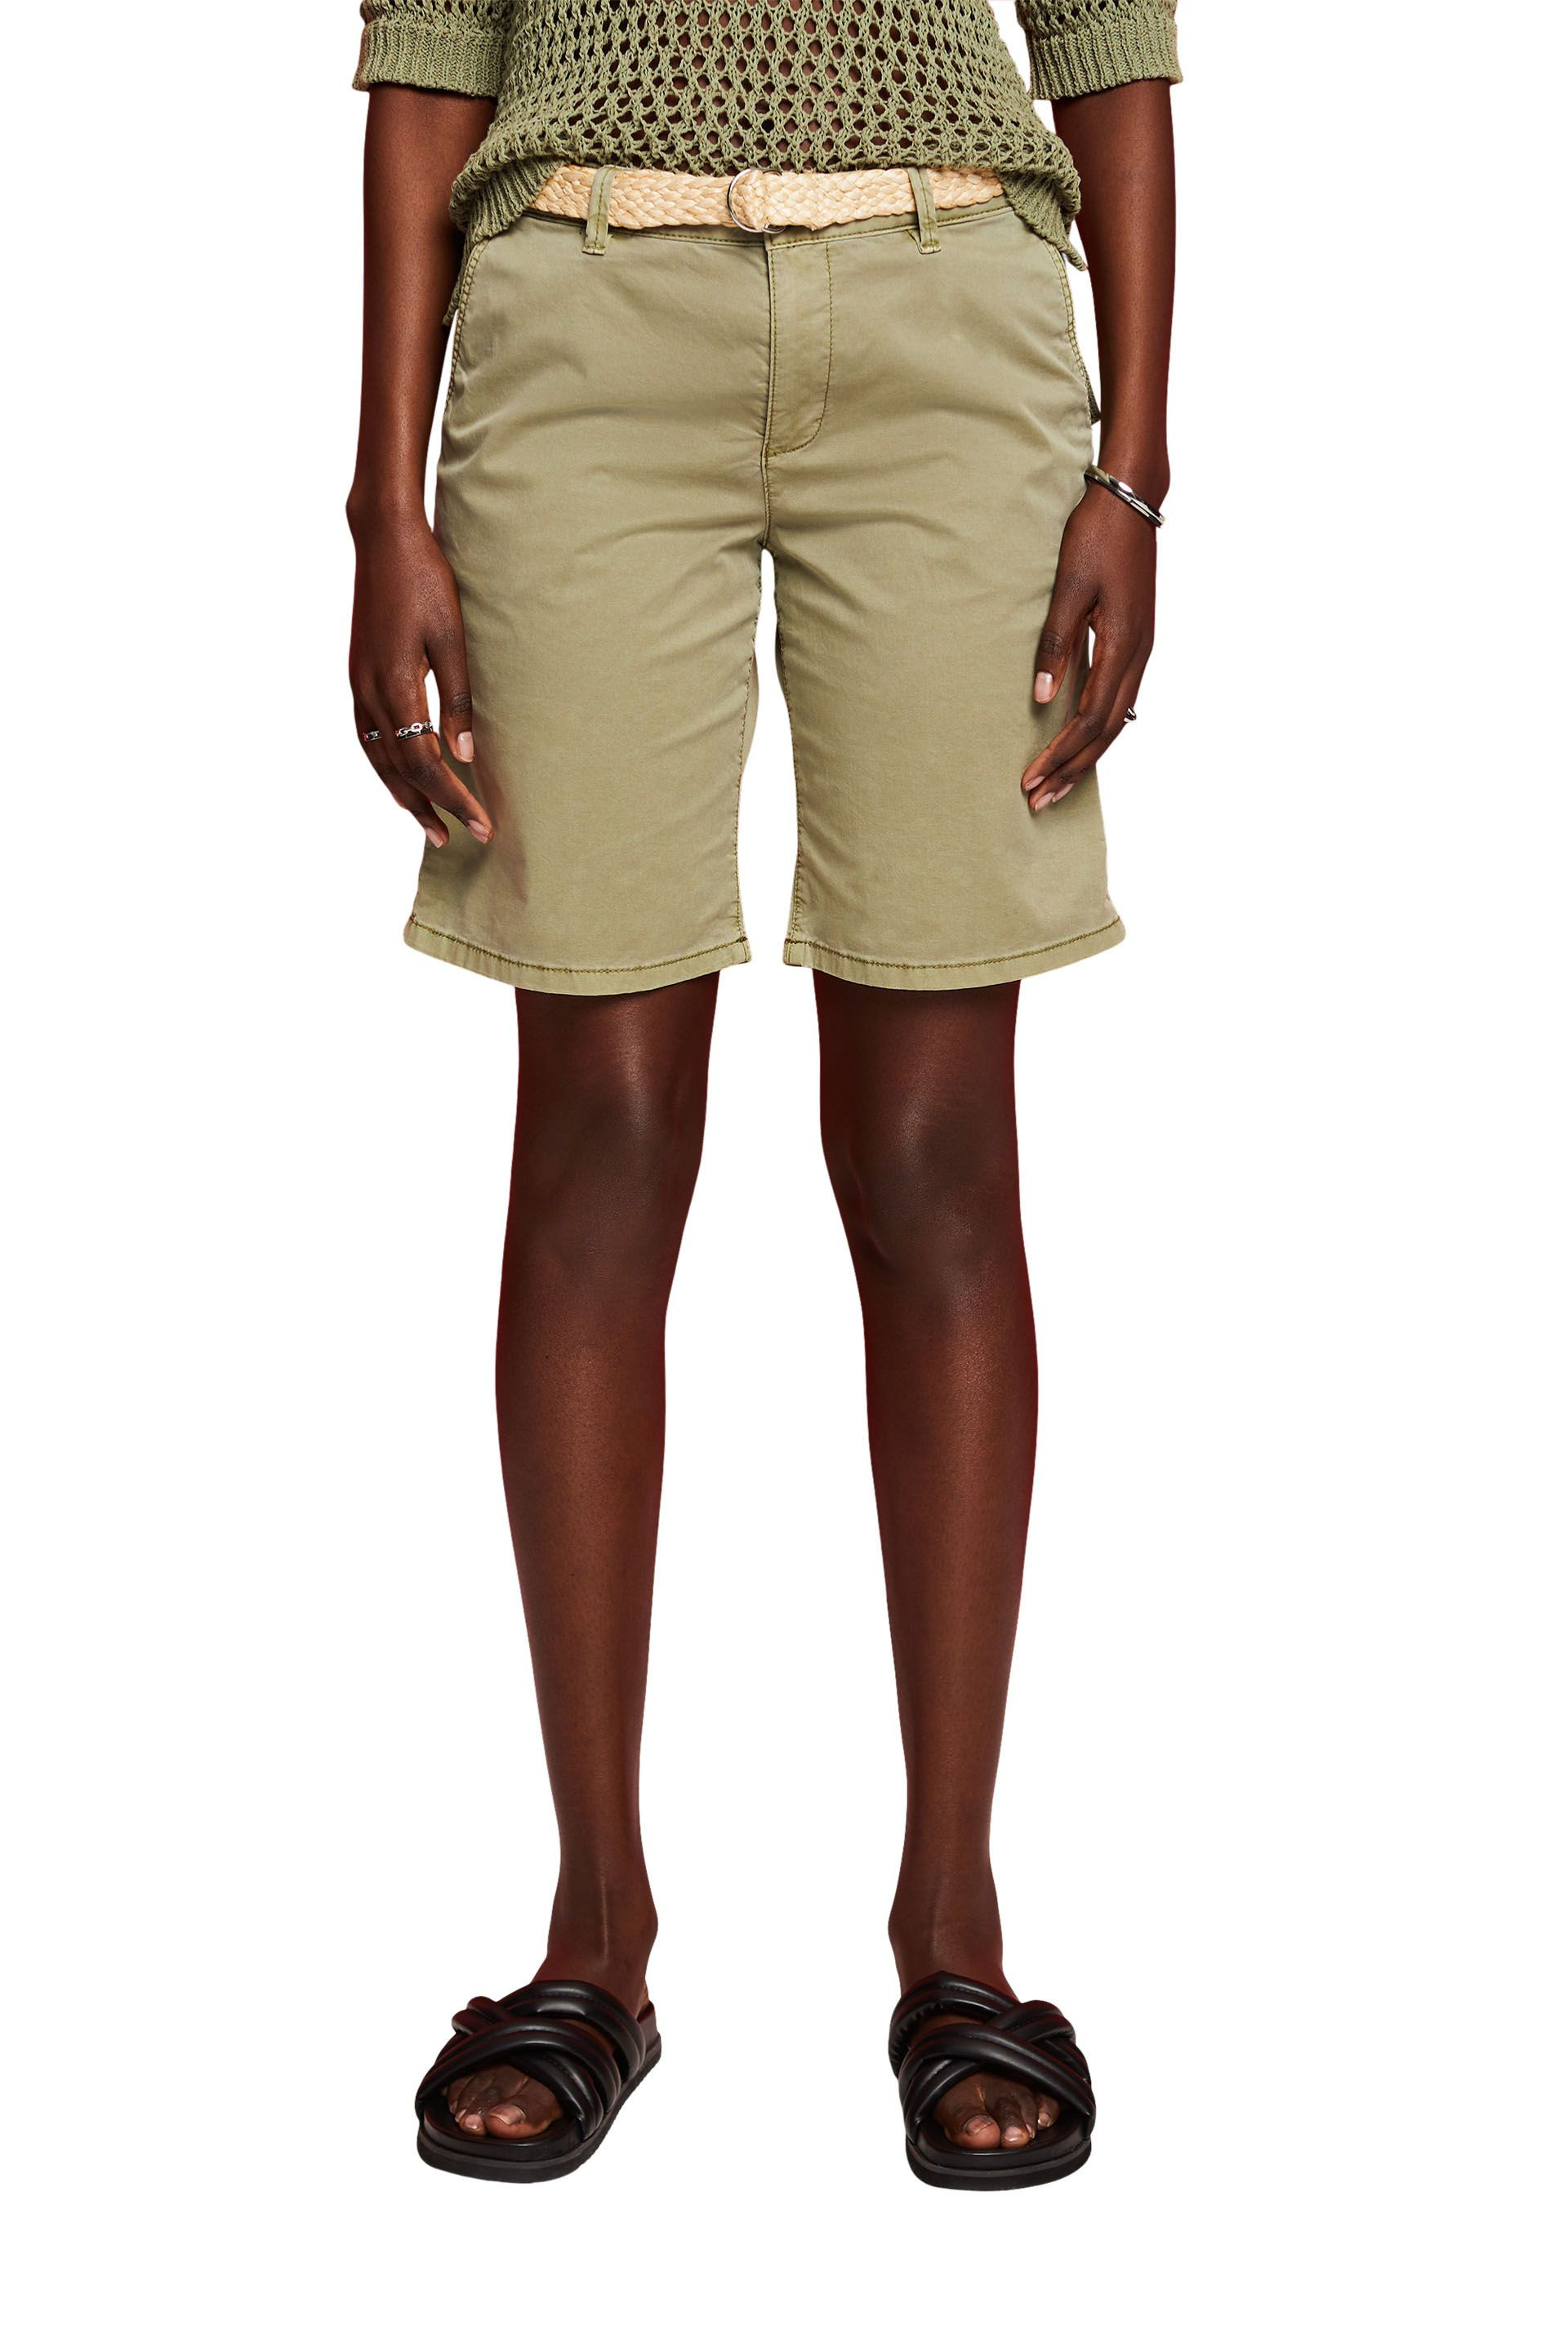 Esprit - Shorts with braided raffia belt, Green, large image number 1